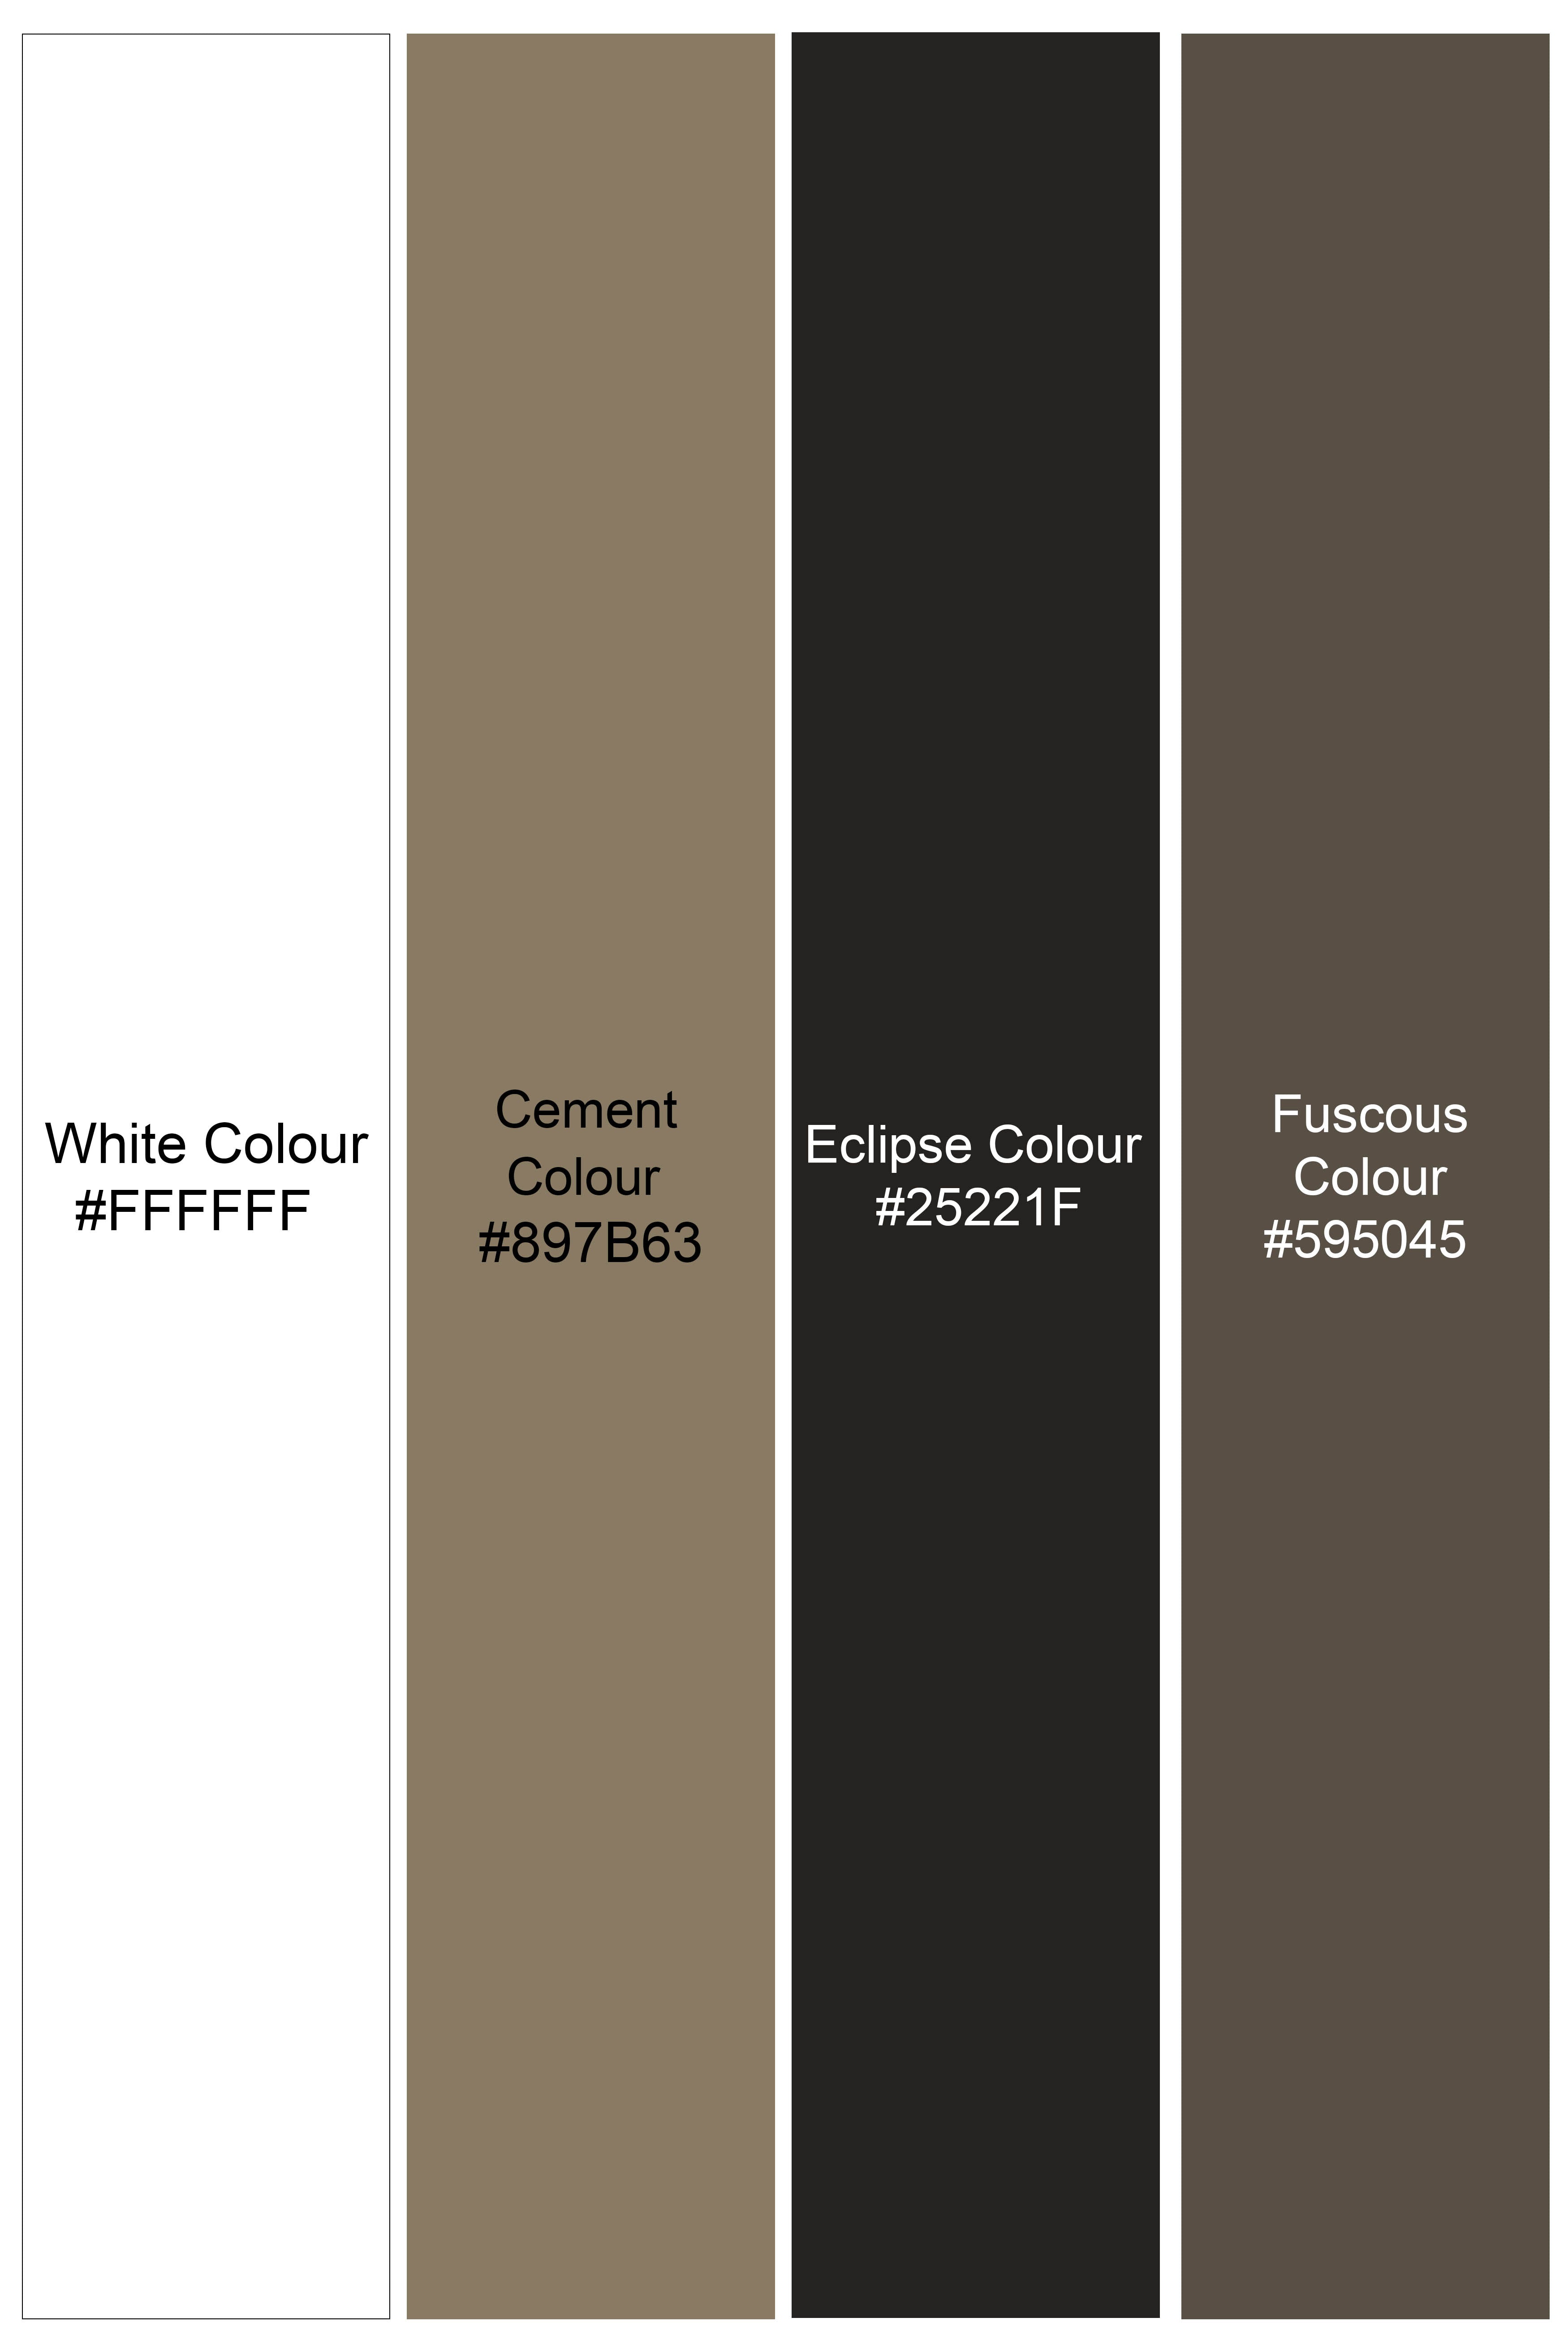 Bright White with Cement Brown and Eclipse Black Camouflage Cargo Shorts SR275-28, SR275-30, SR275-32, SR275-34, SR275-36, SR275-38, SR275-40, SR275-42, SR275-44